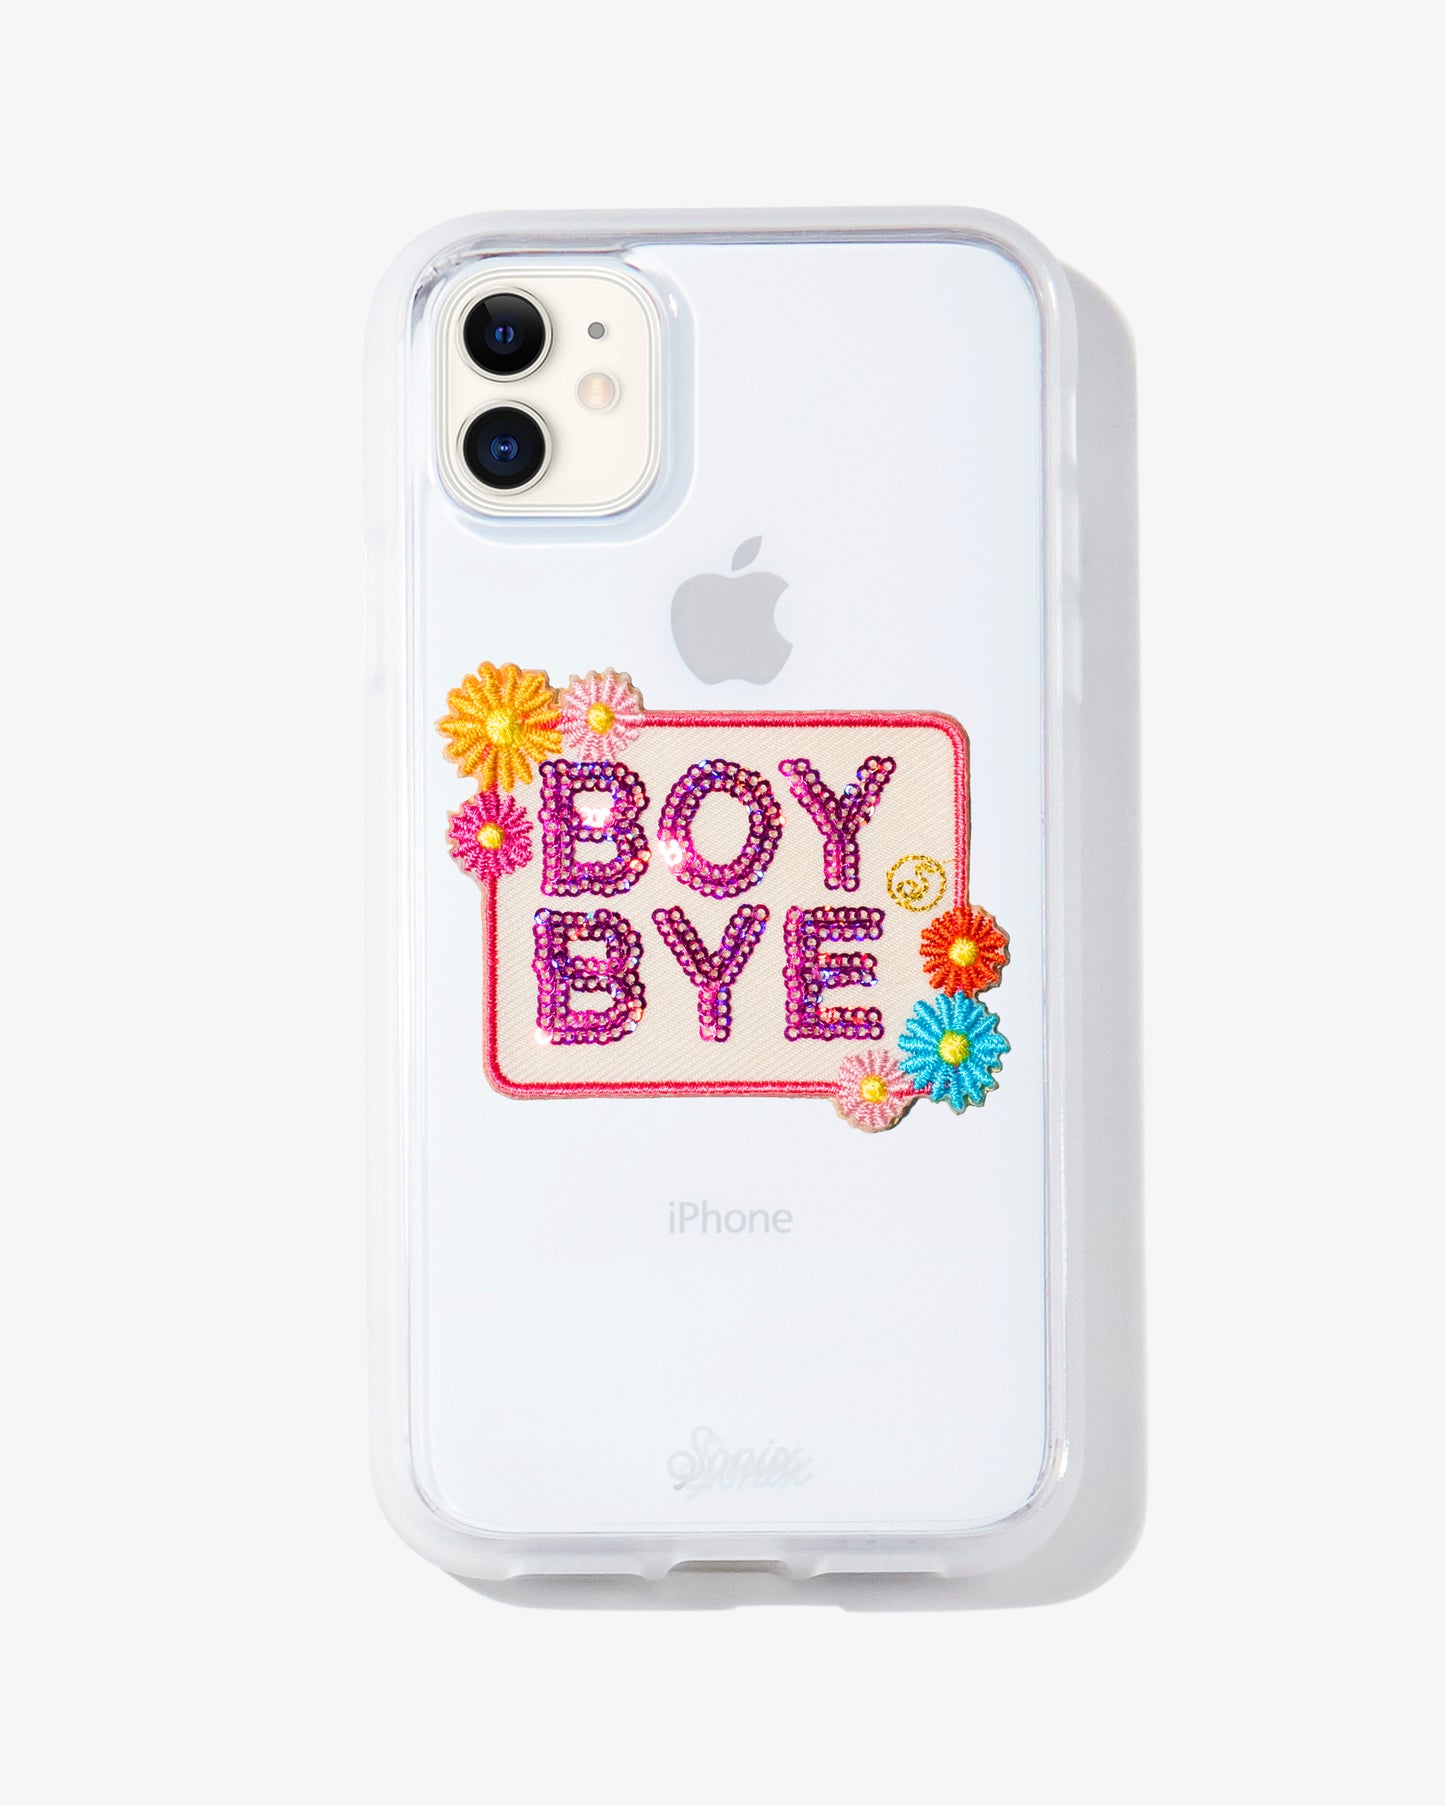 Boy Bye - Patch